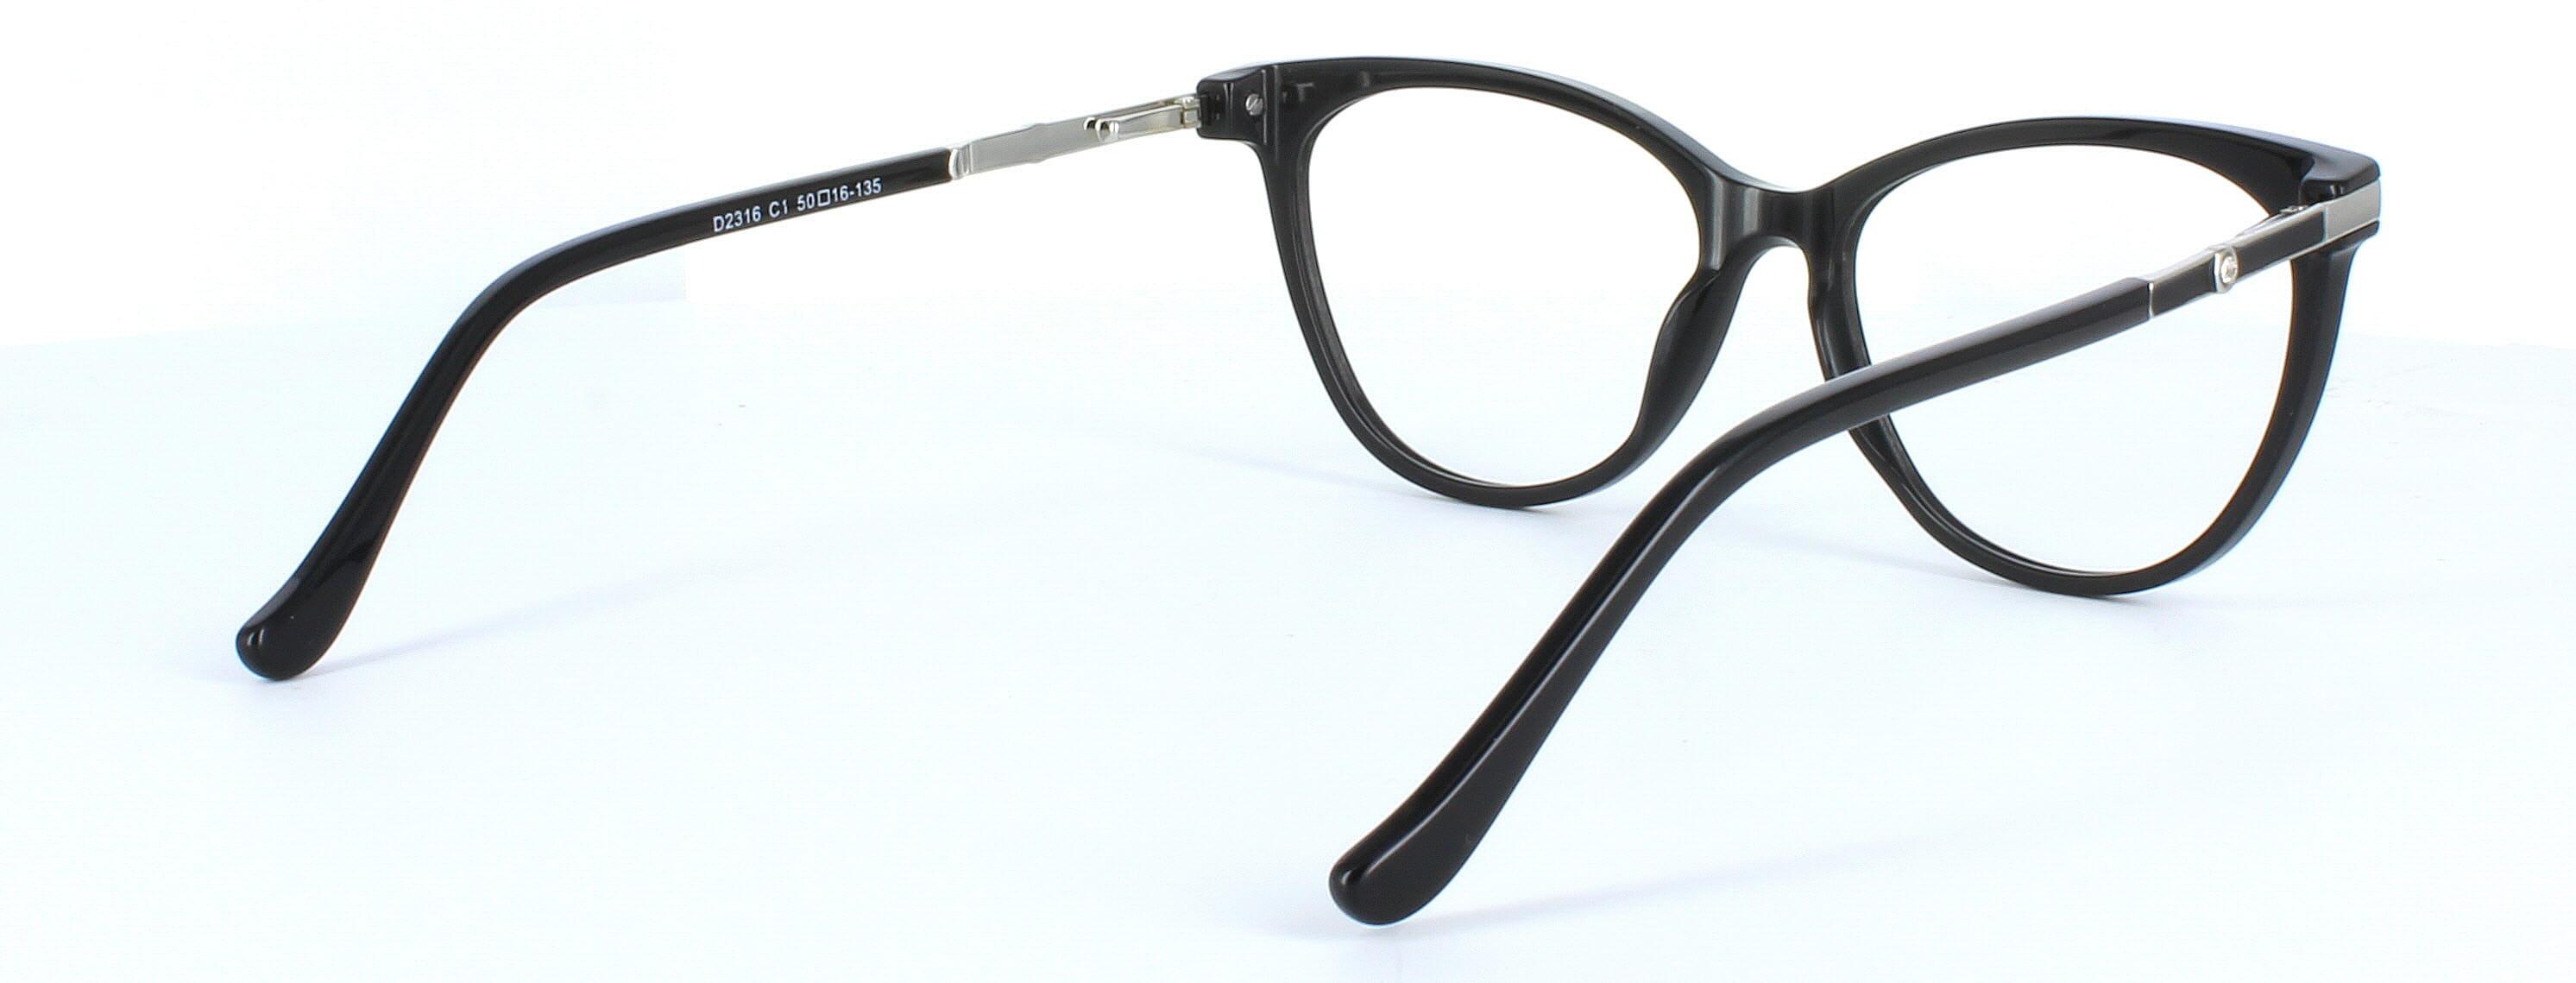 Verwood - ladies acetate glasses here in shiny black - image view 4